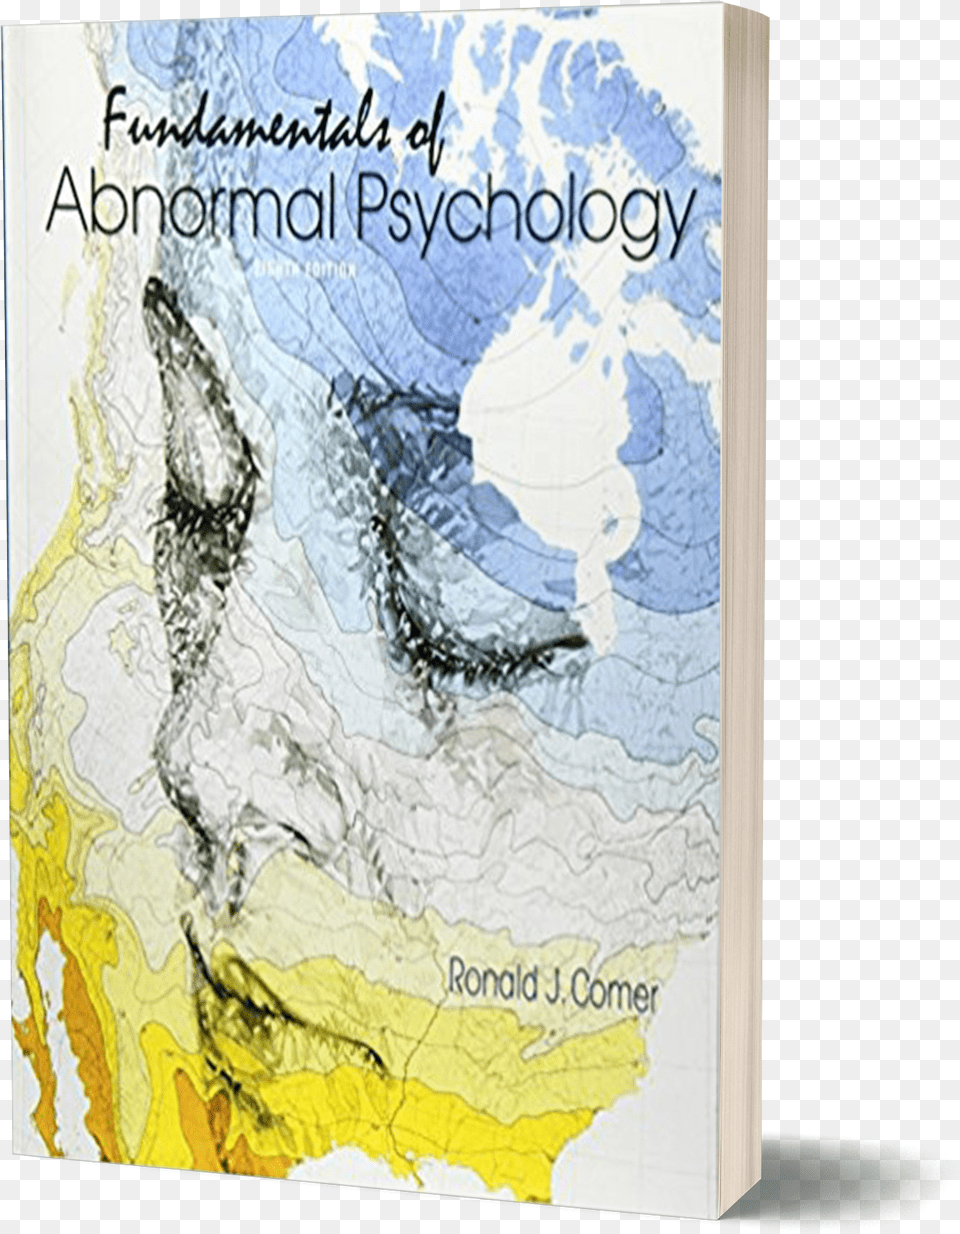 Fundamentals Fundamentals Of Abnormal Psychology Amp Case Studies, Book, Chart, Plot, Publication Png Image